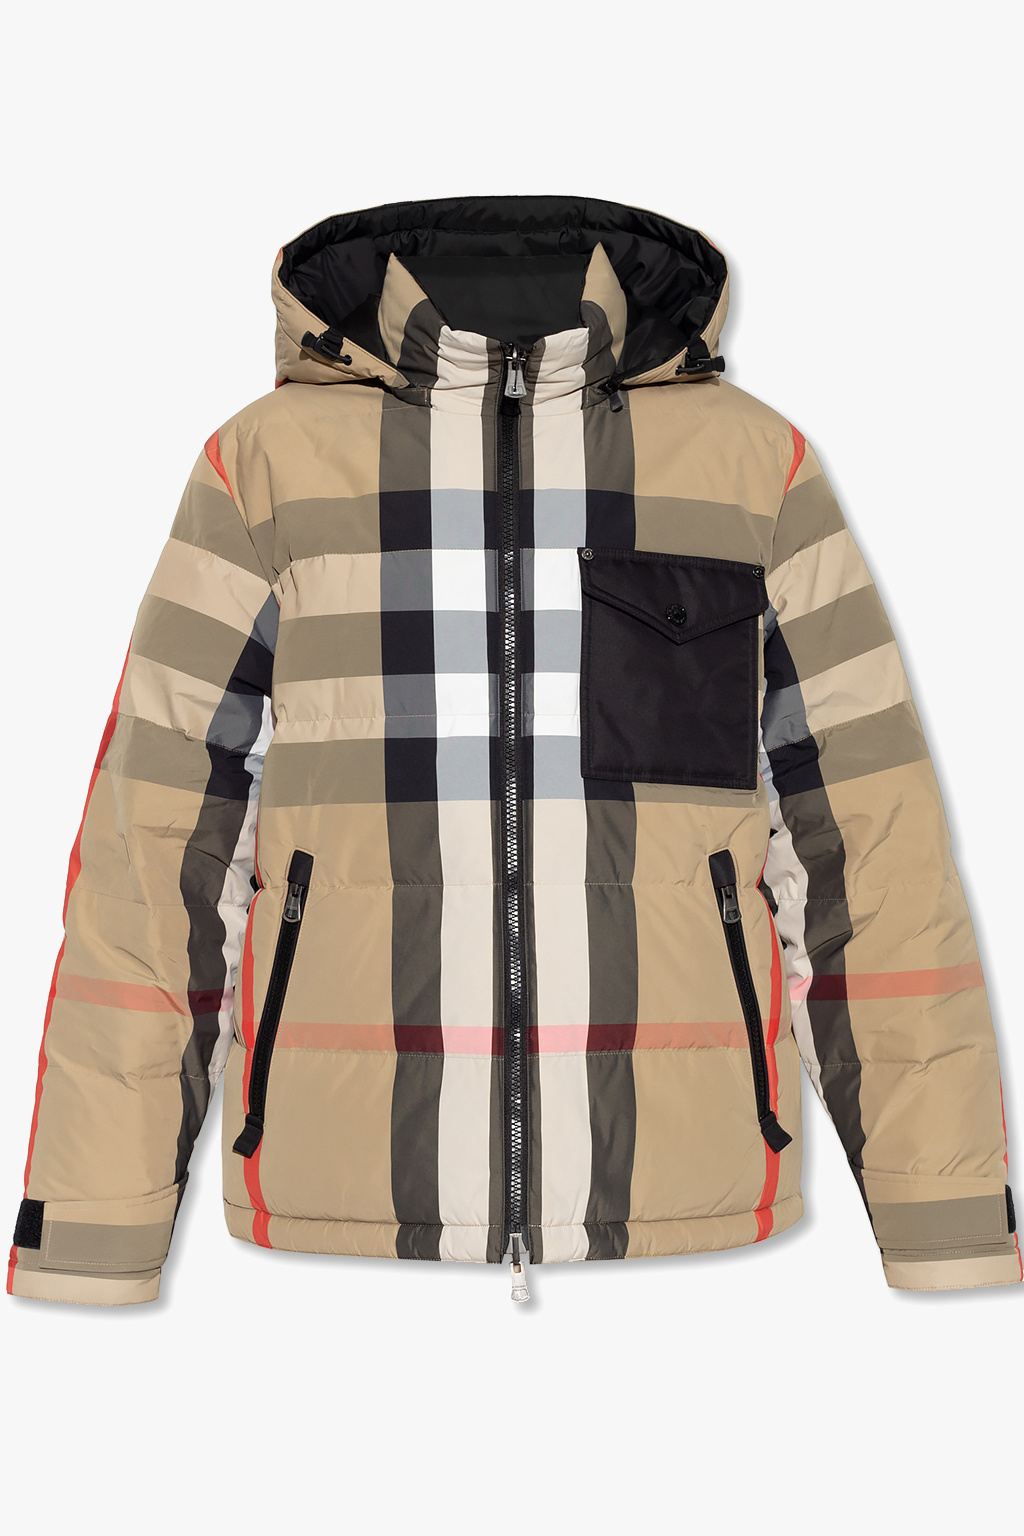 Burberry ‘Rutland’ reversible jacket